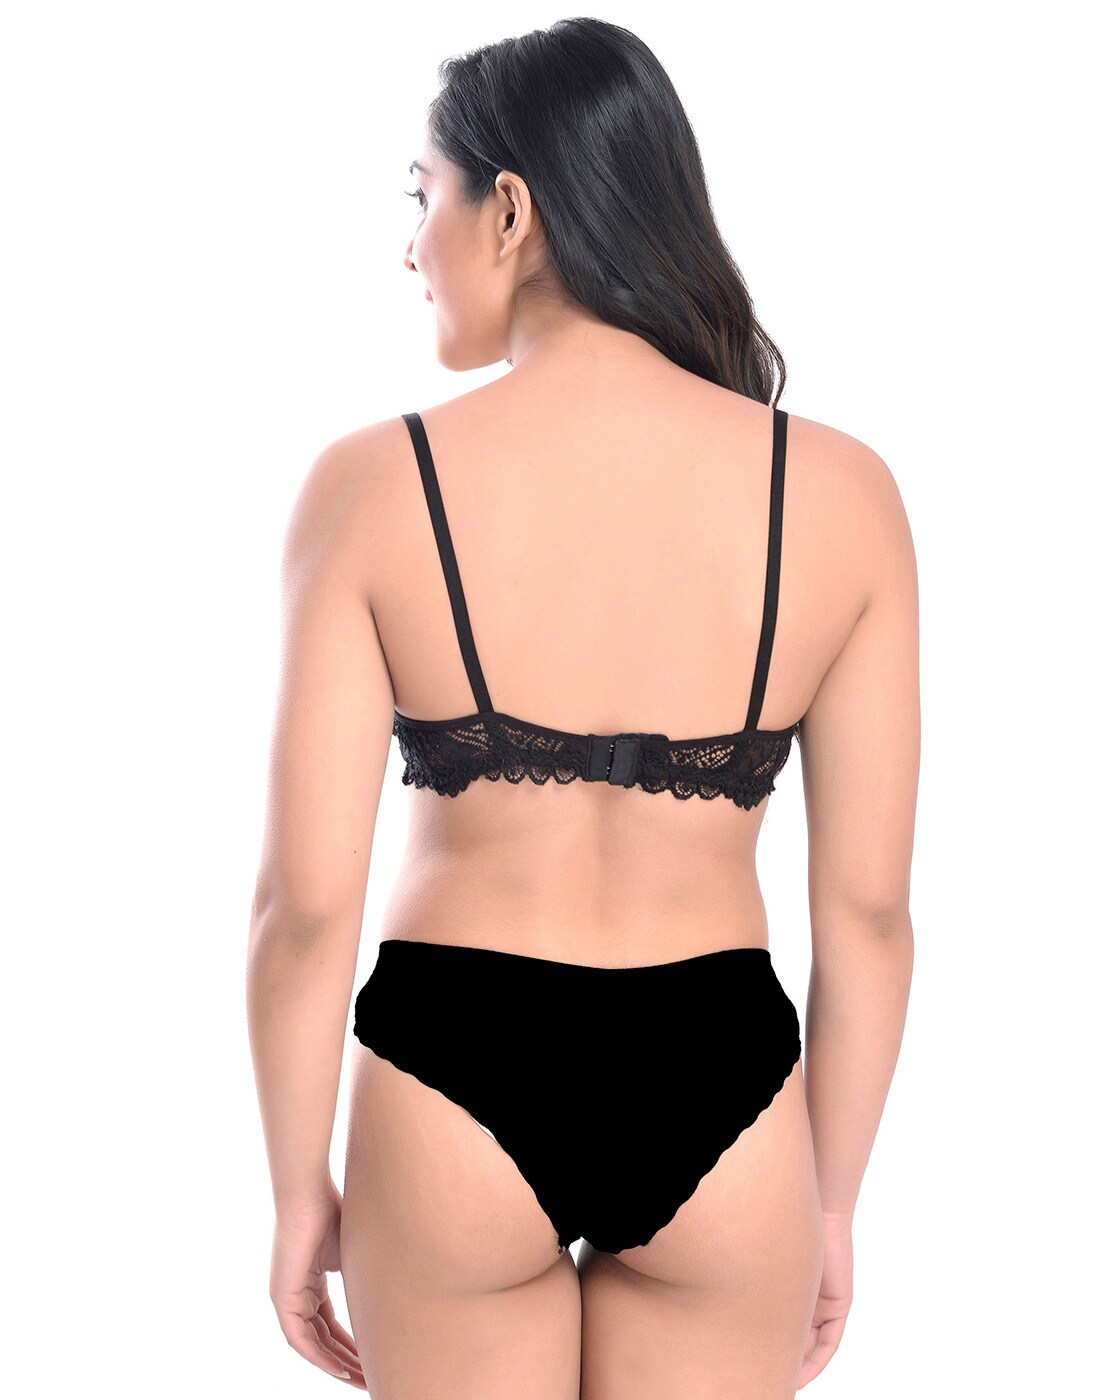 Arousy - Fashion Lingerie Set Cotton Bra Panties Set at Rs 371